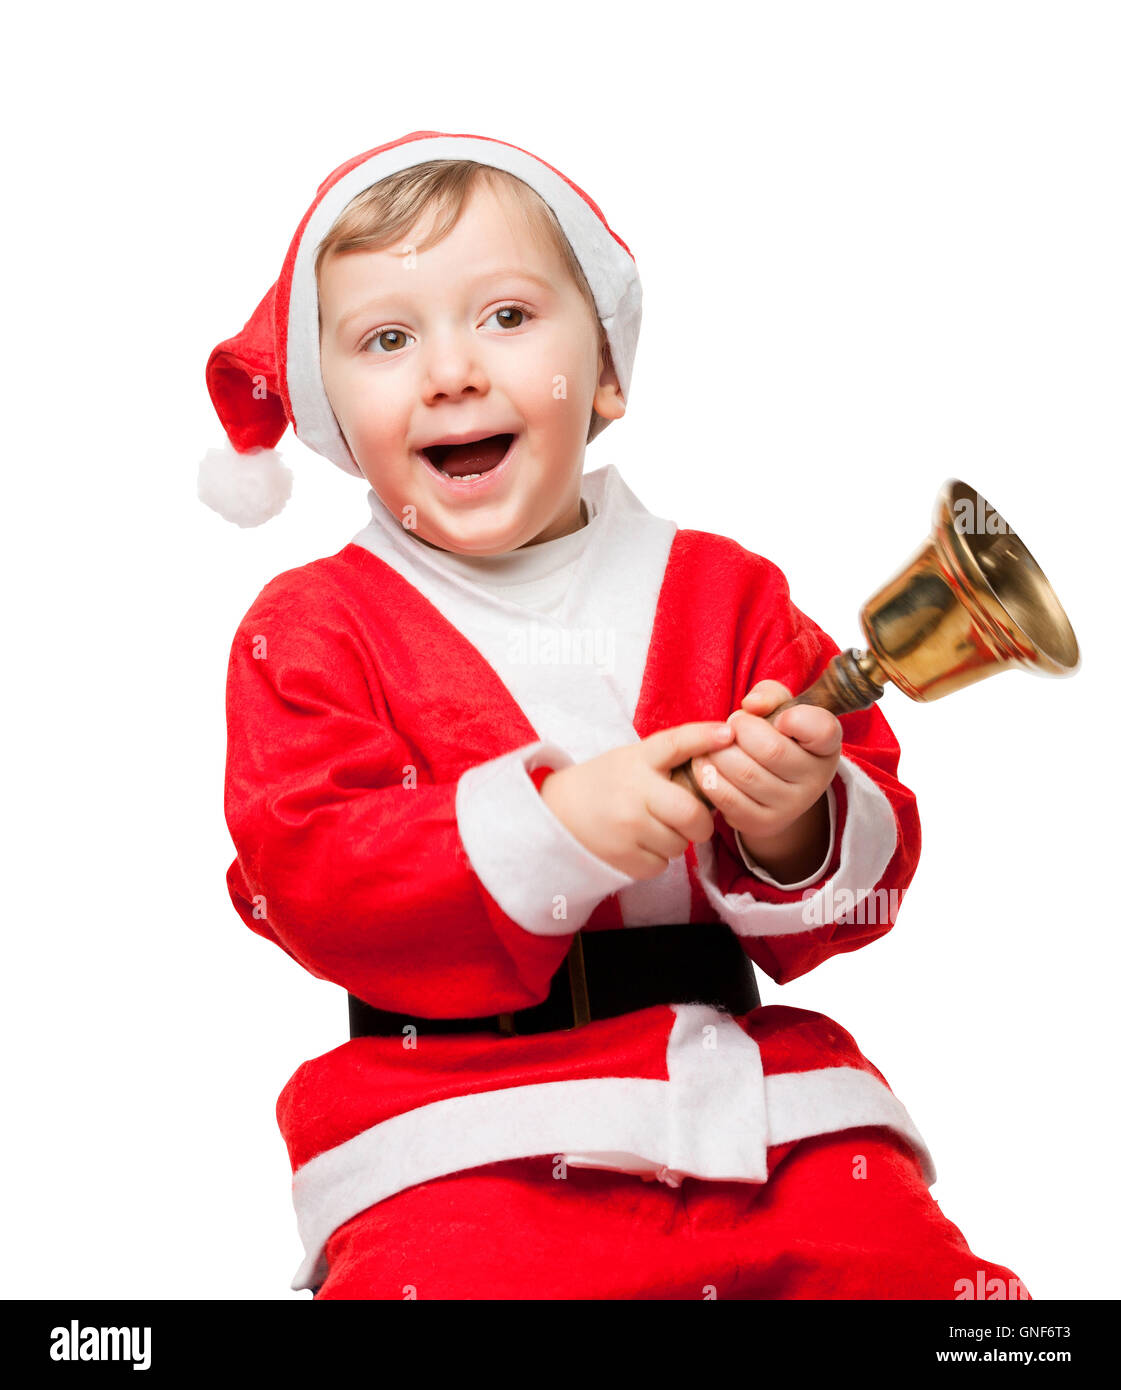 child santa claus isolated on white background Stock Photo